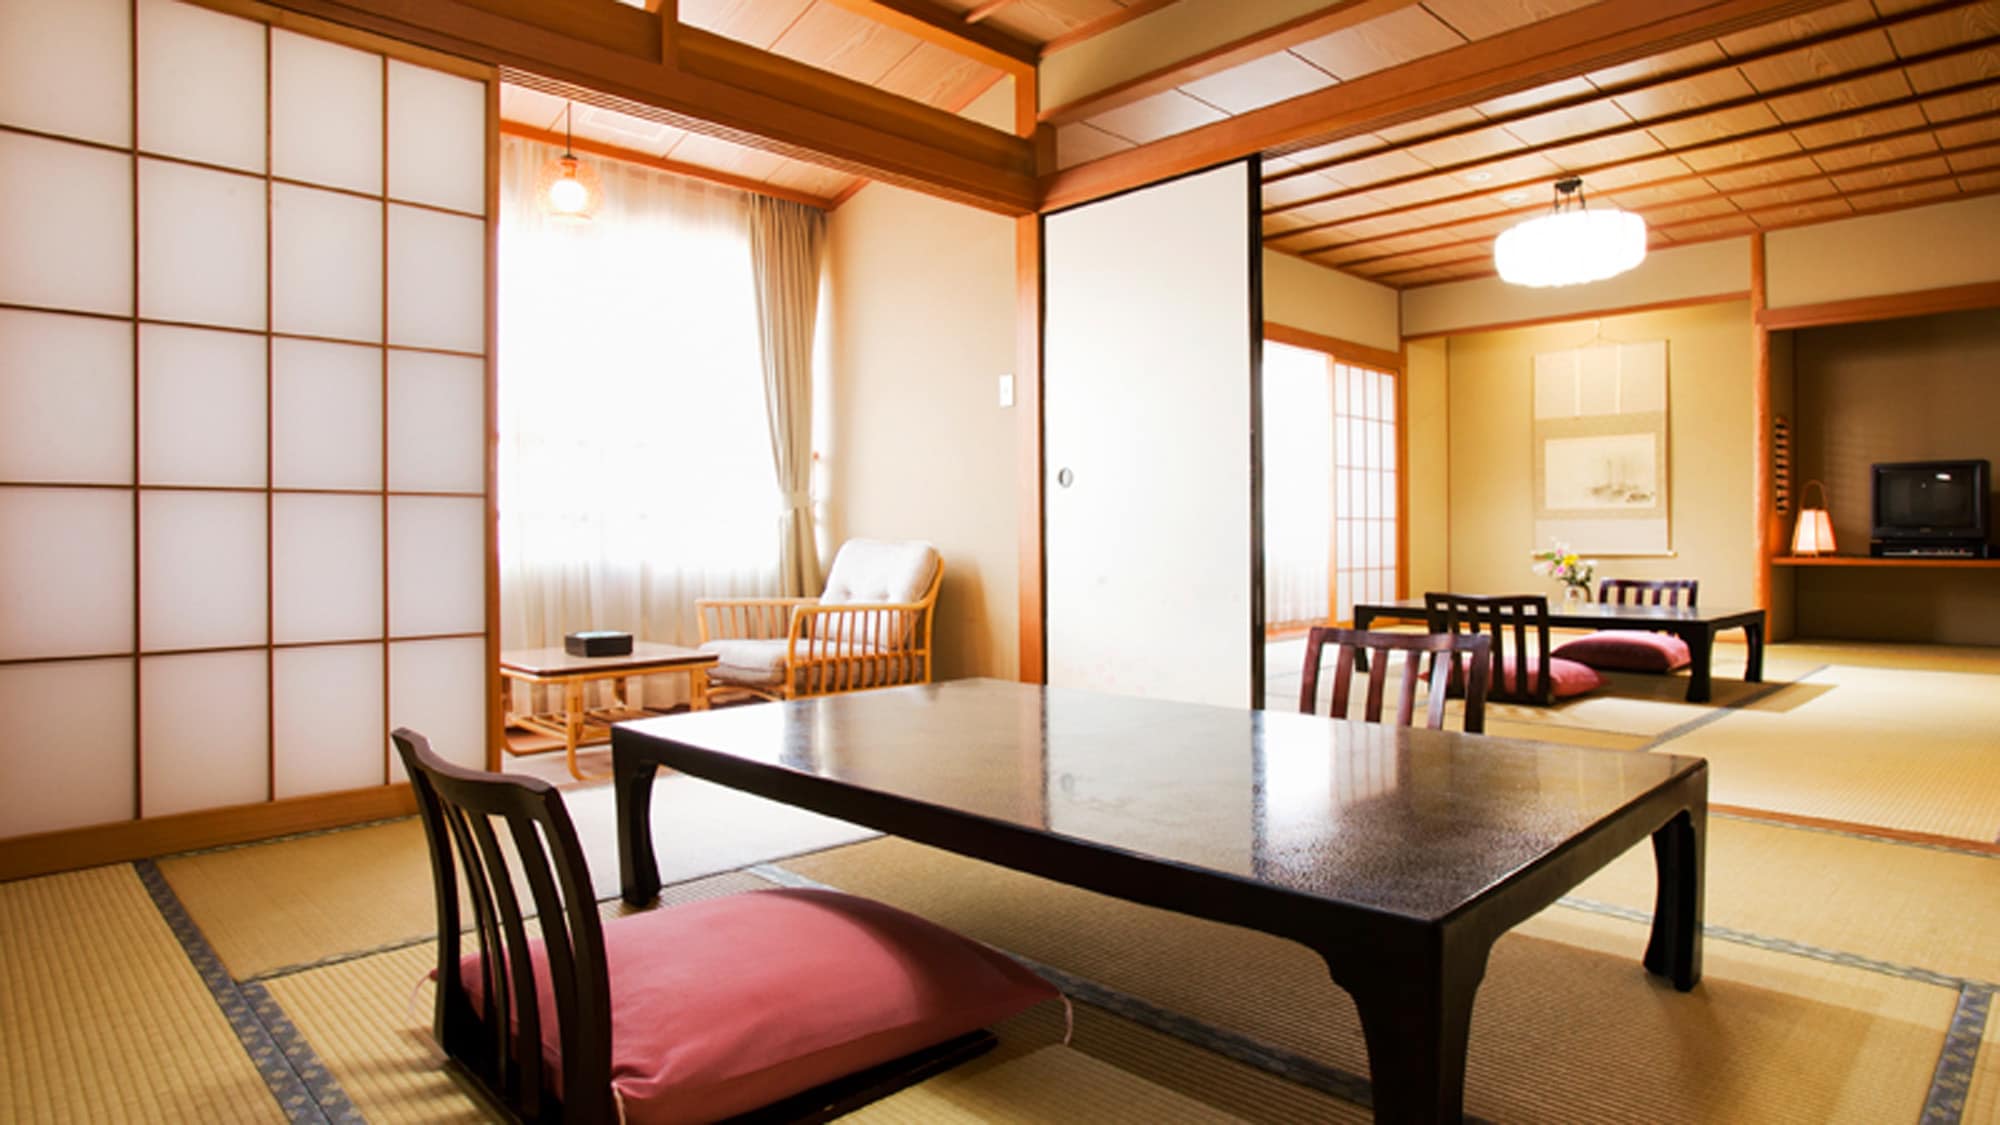 ■ Kachotei 2 ห้อง (ห้องสไตล์ญี่ปุ่นพร้อมห้องอาบน้ำและห้องส้วม 10 + 8 เสื่อทาทามิ)